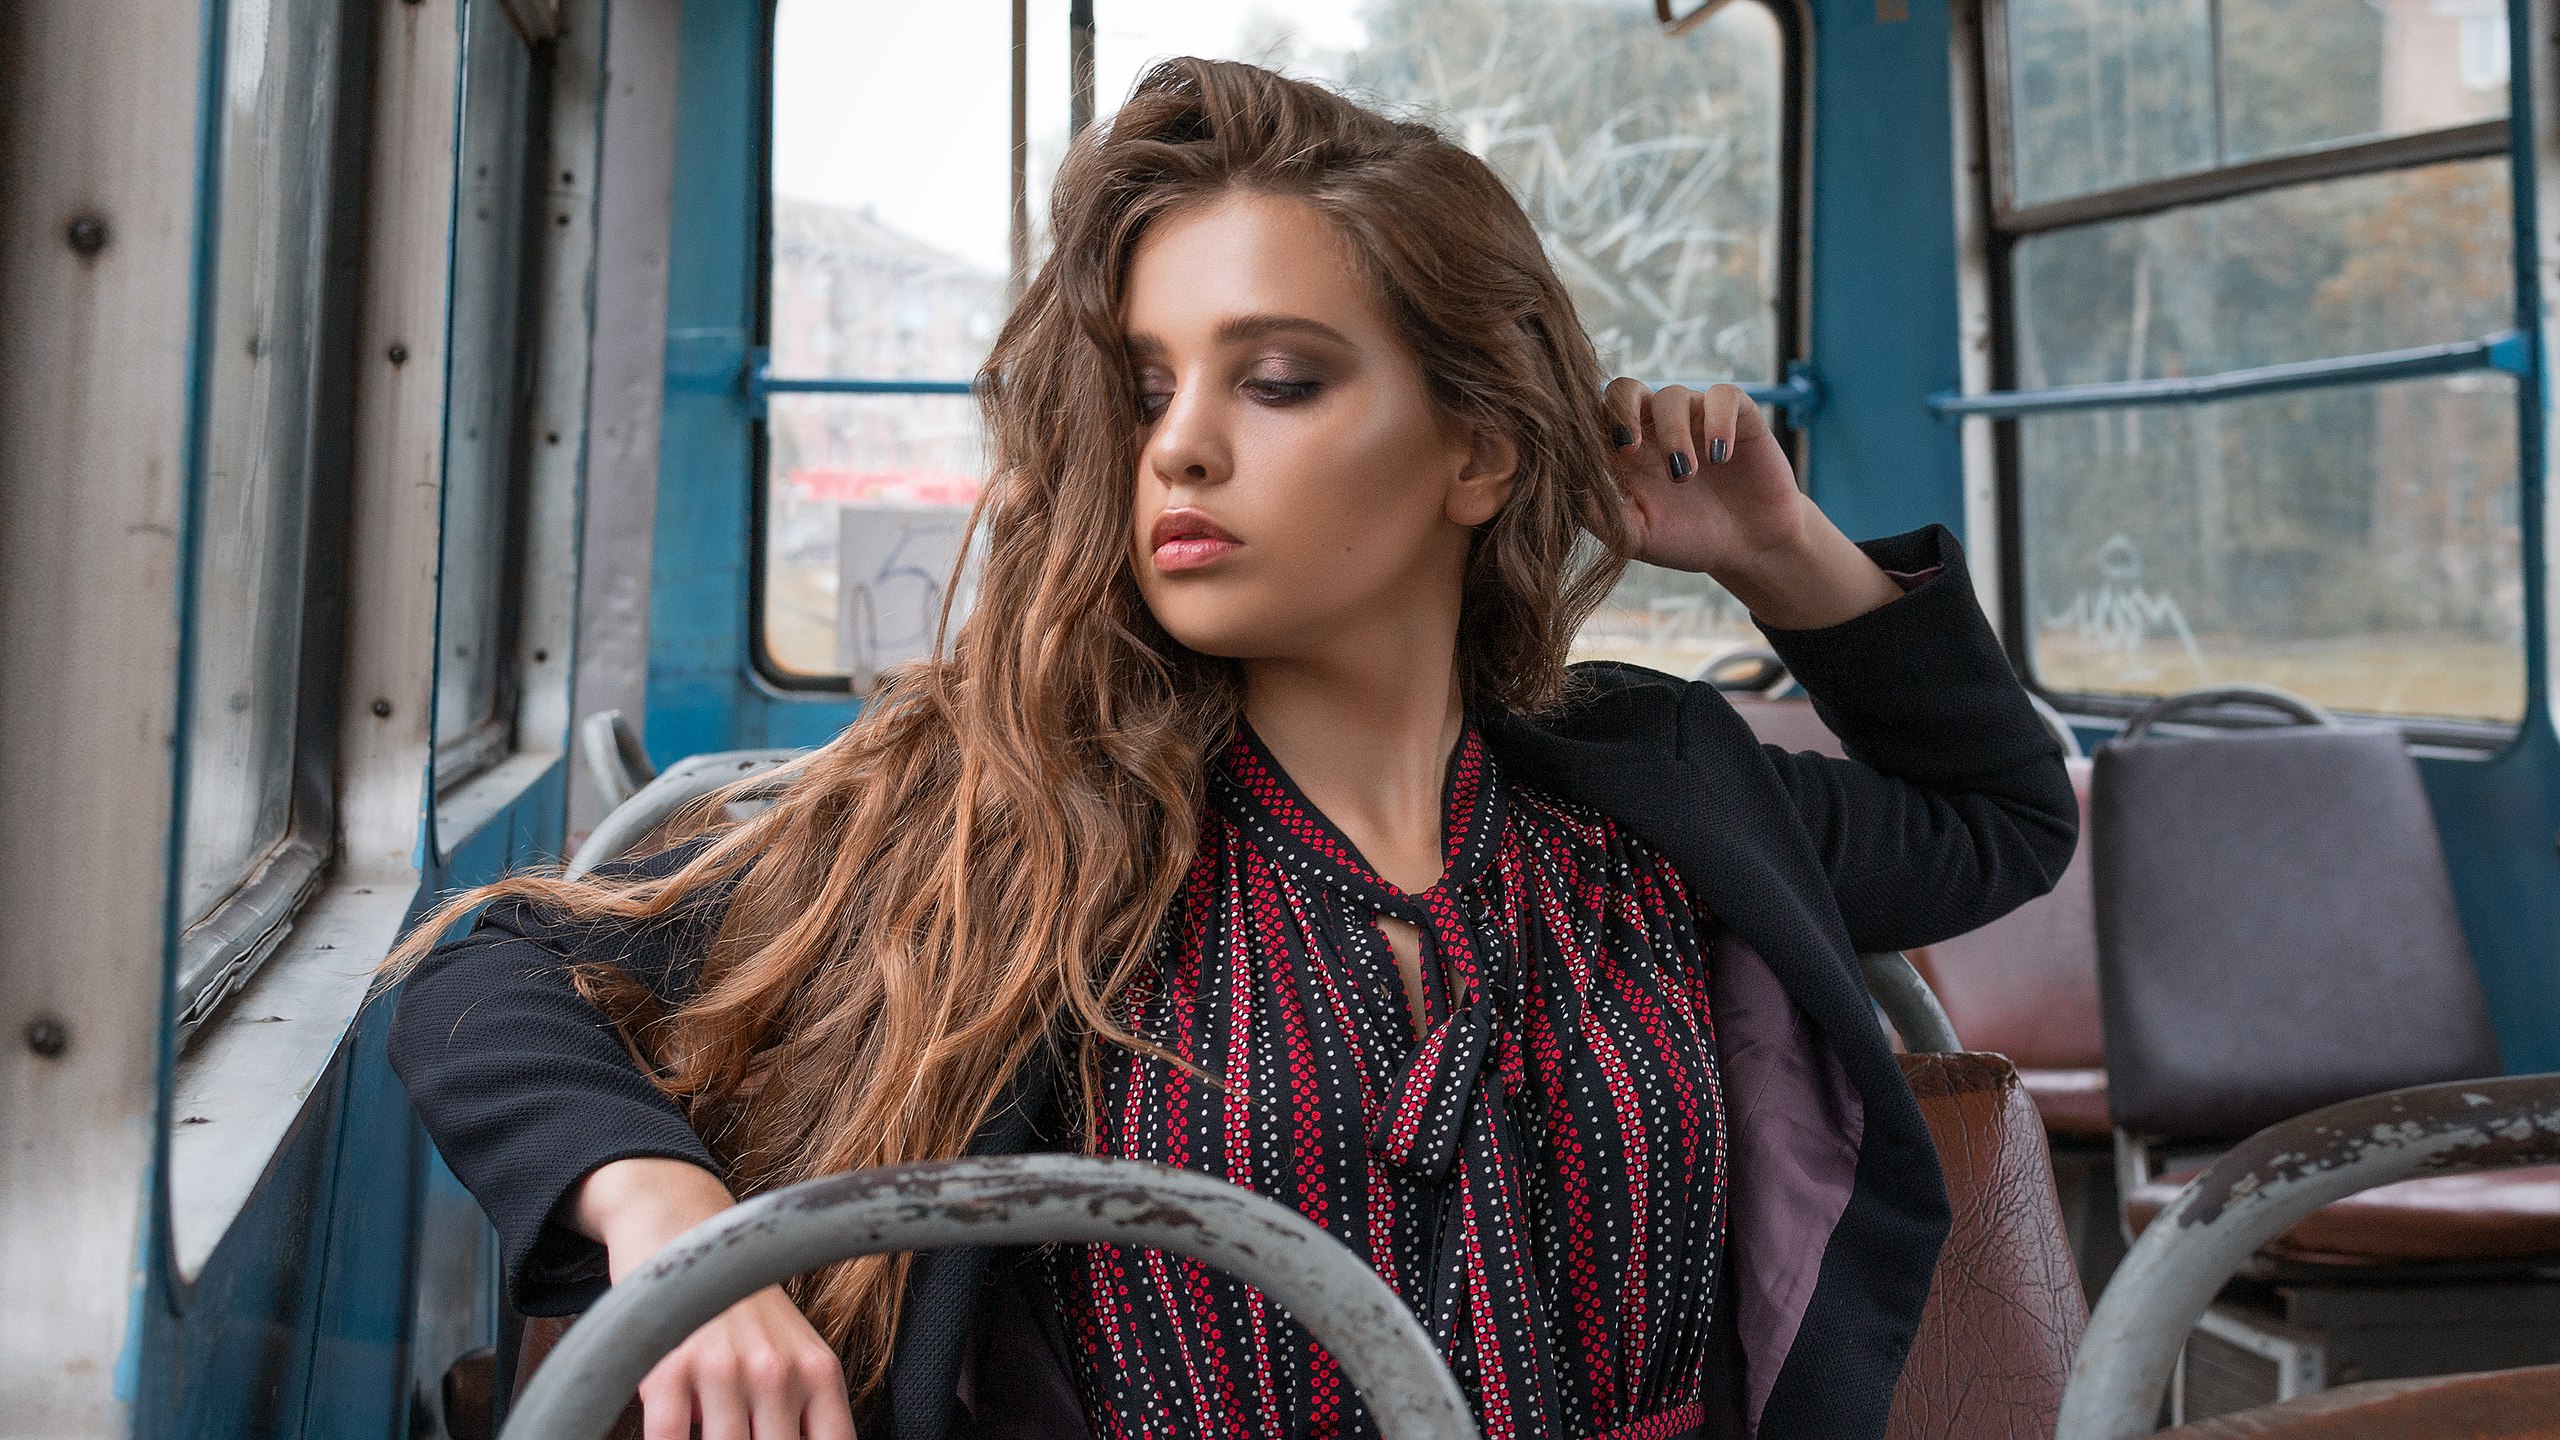 People 2560x1440 long hair face women Artemy Mostovoy Maria Smirnova in bus model brunette